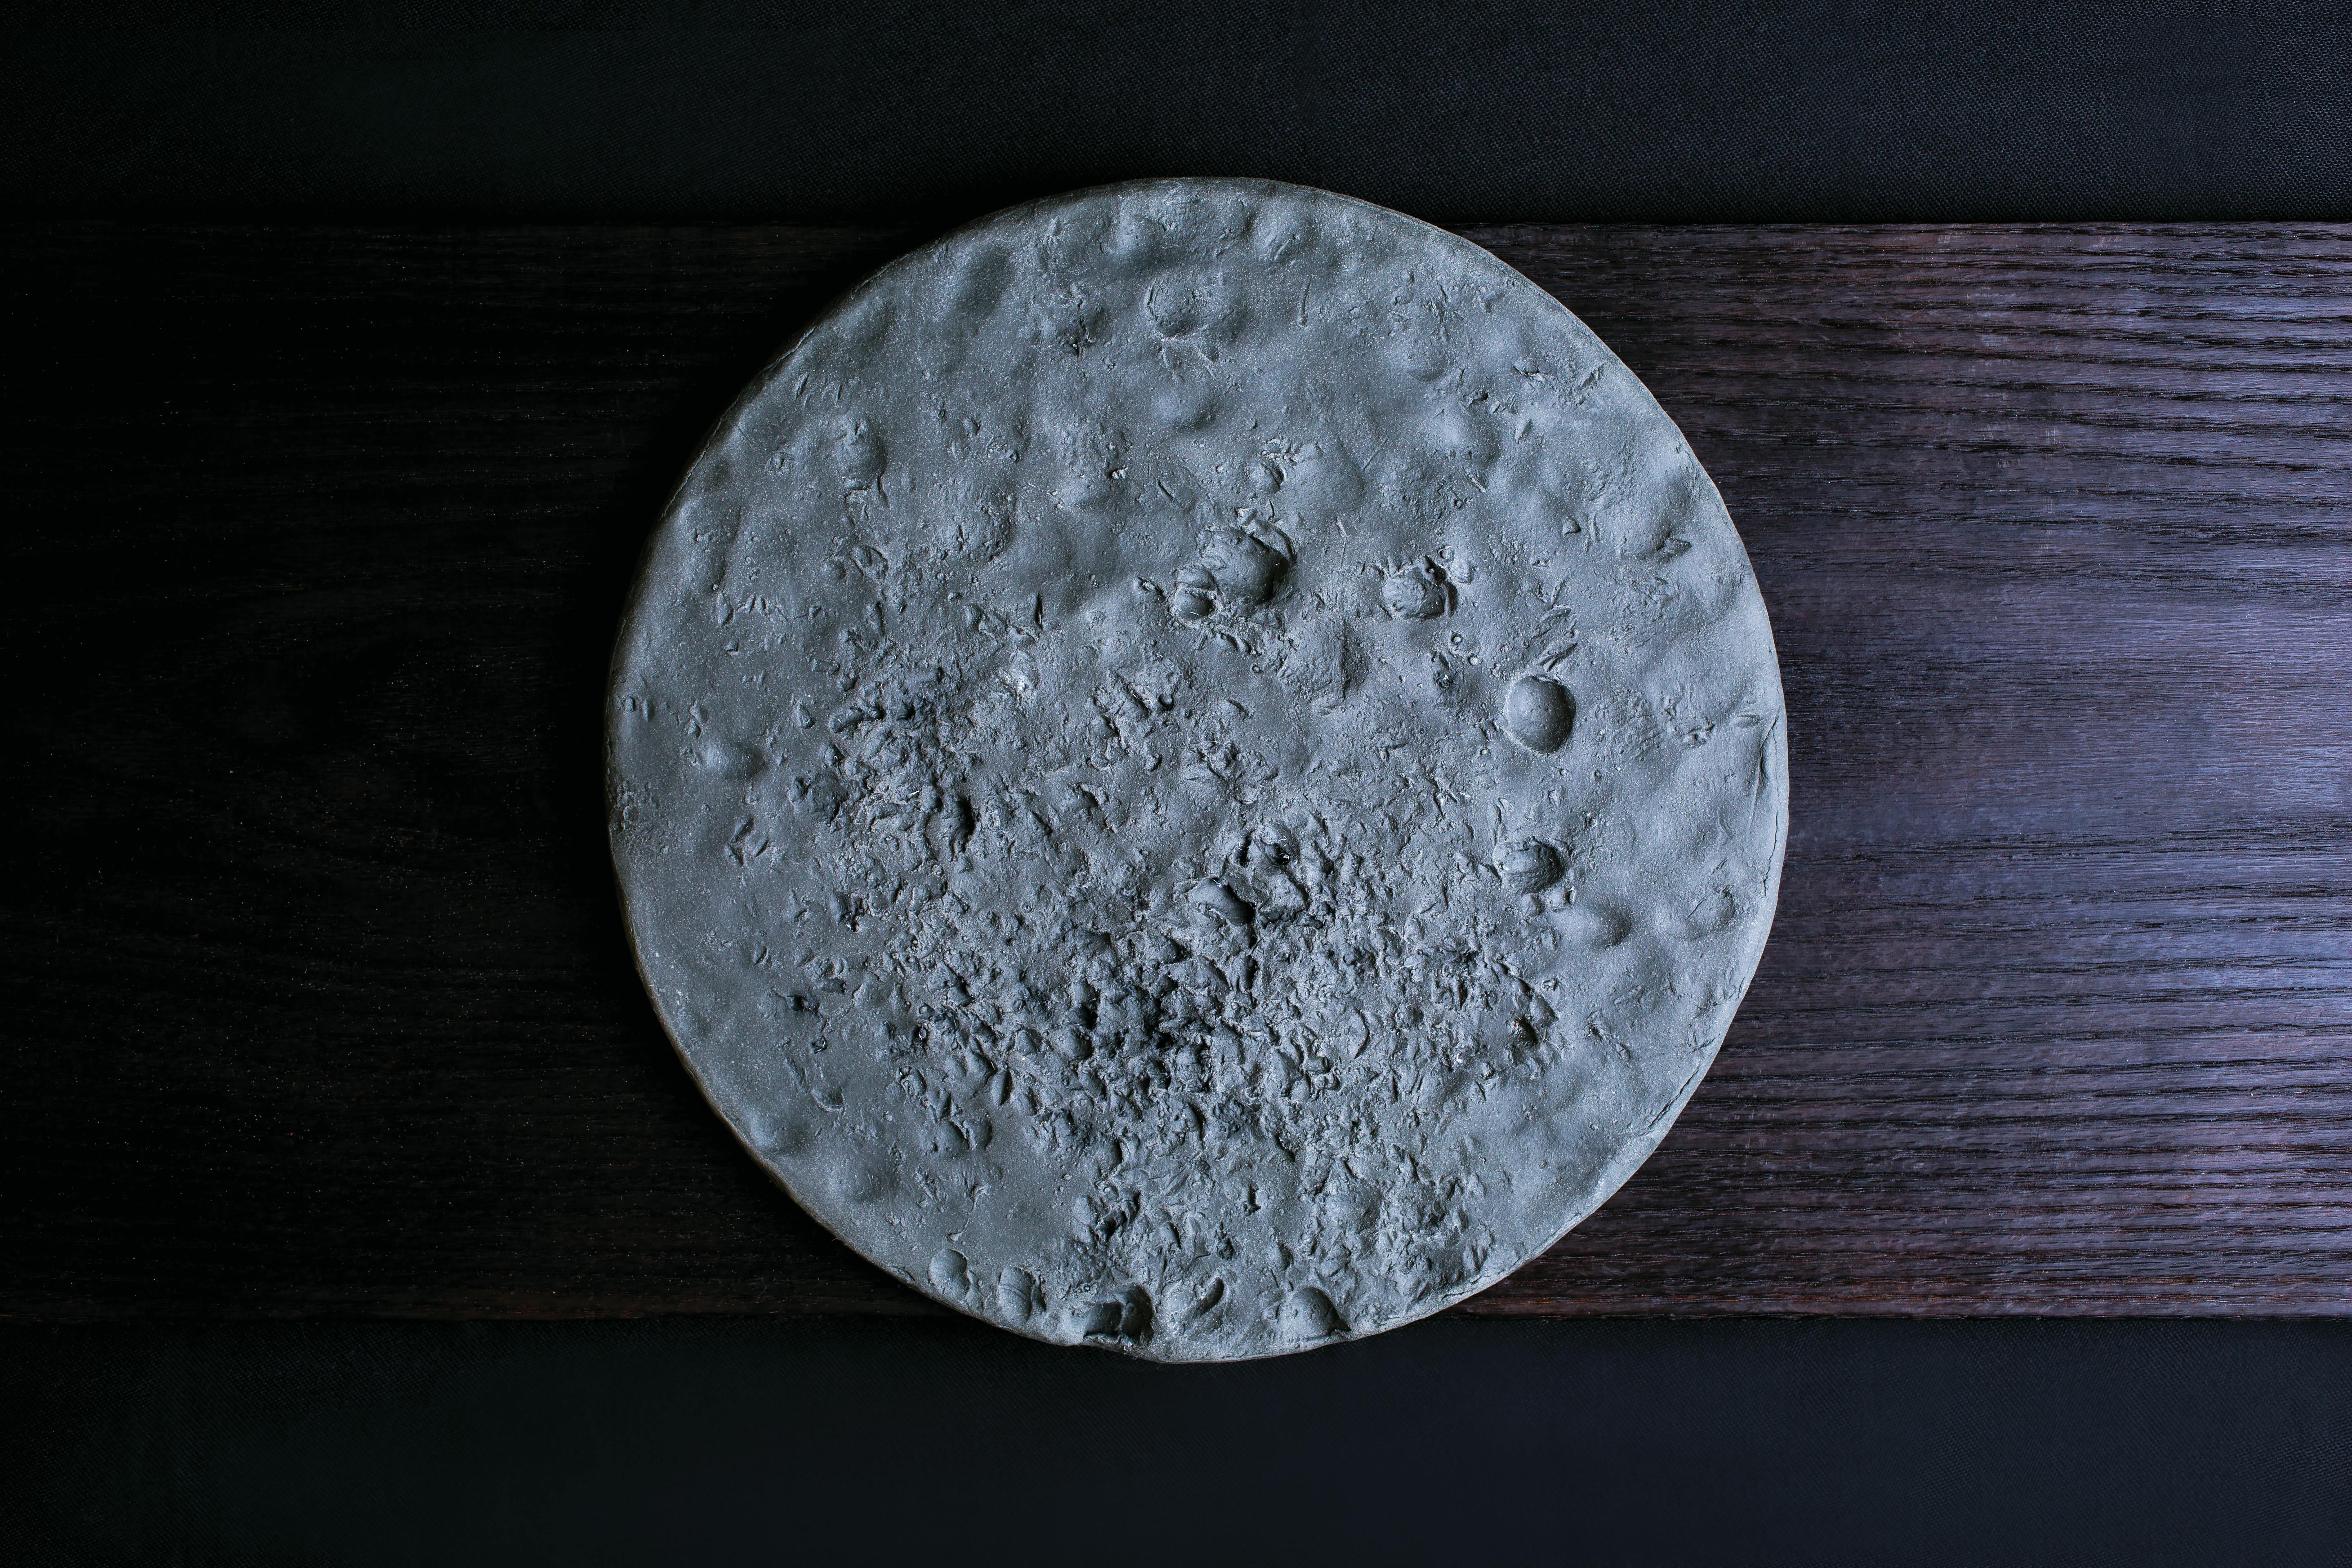 Gray round pocked ceramic plate on wood planks